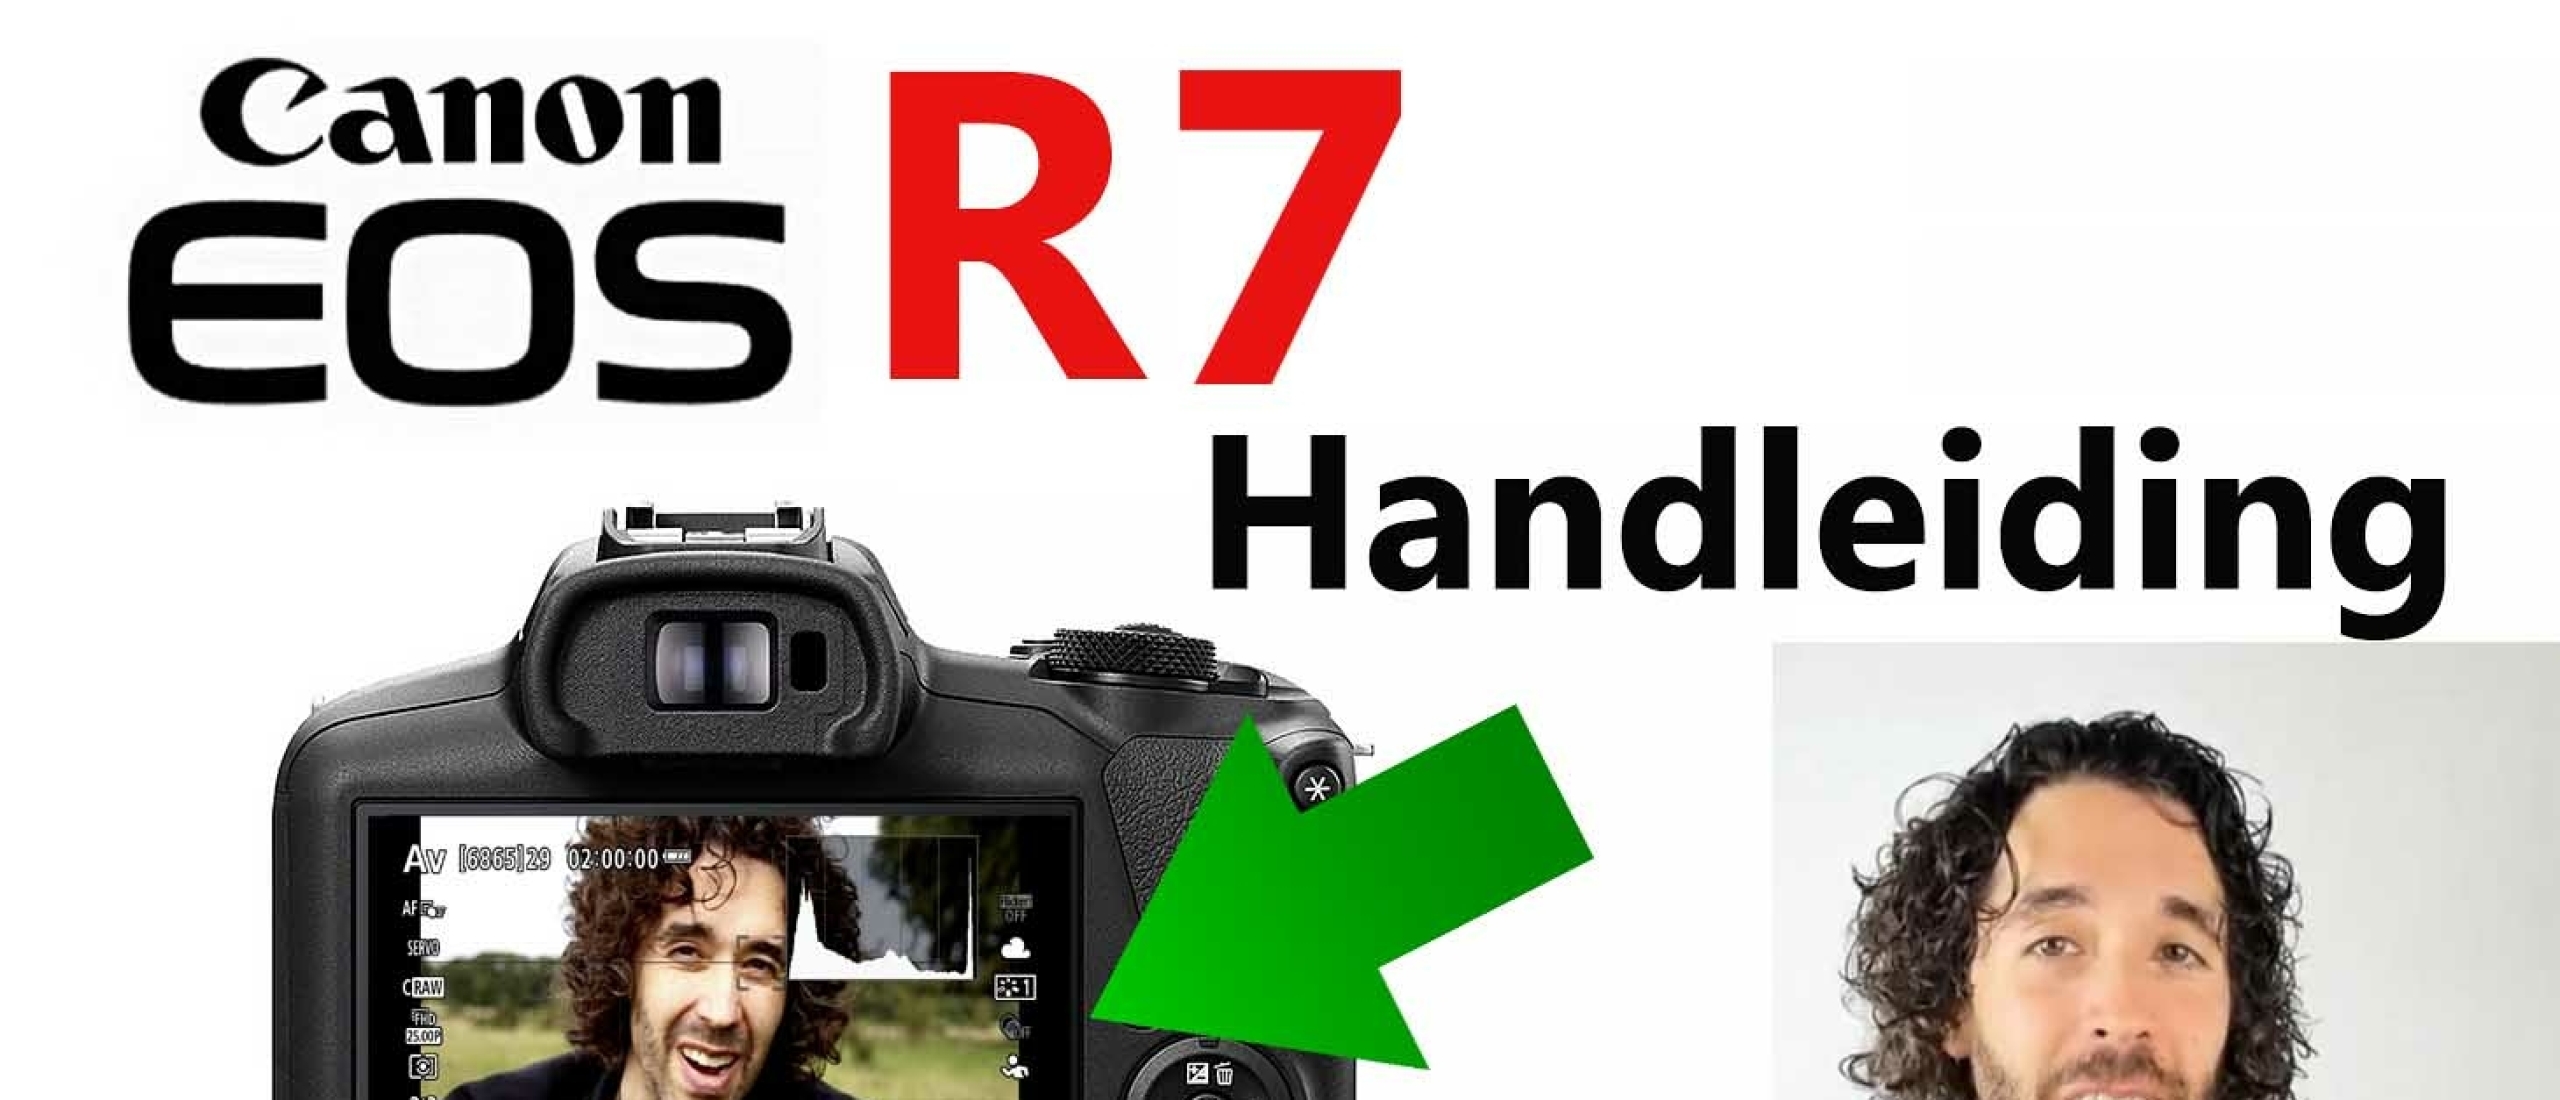 Canon EOS R7 Systeem camera Handleiding: Functies, knoppen, menu en instellingen uitgelegd